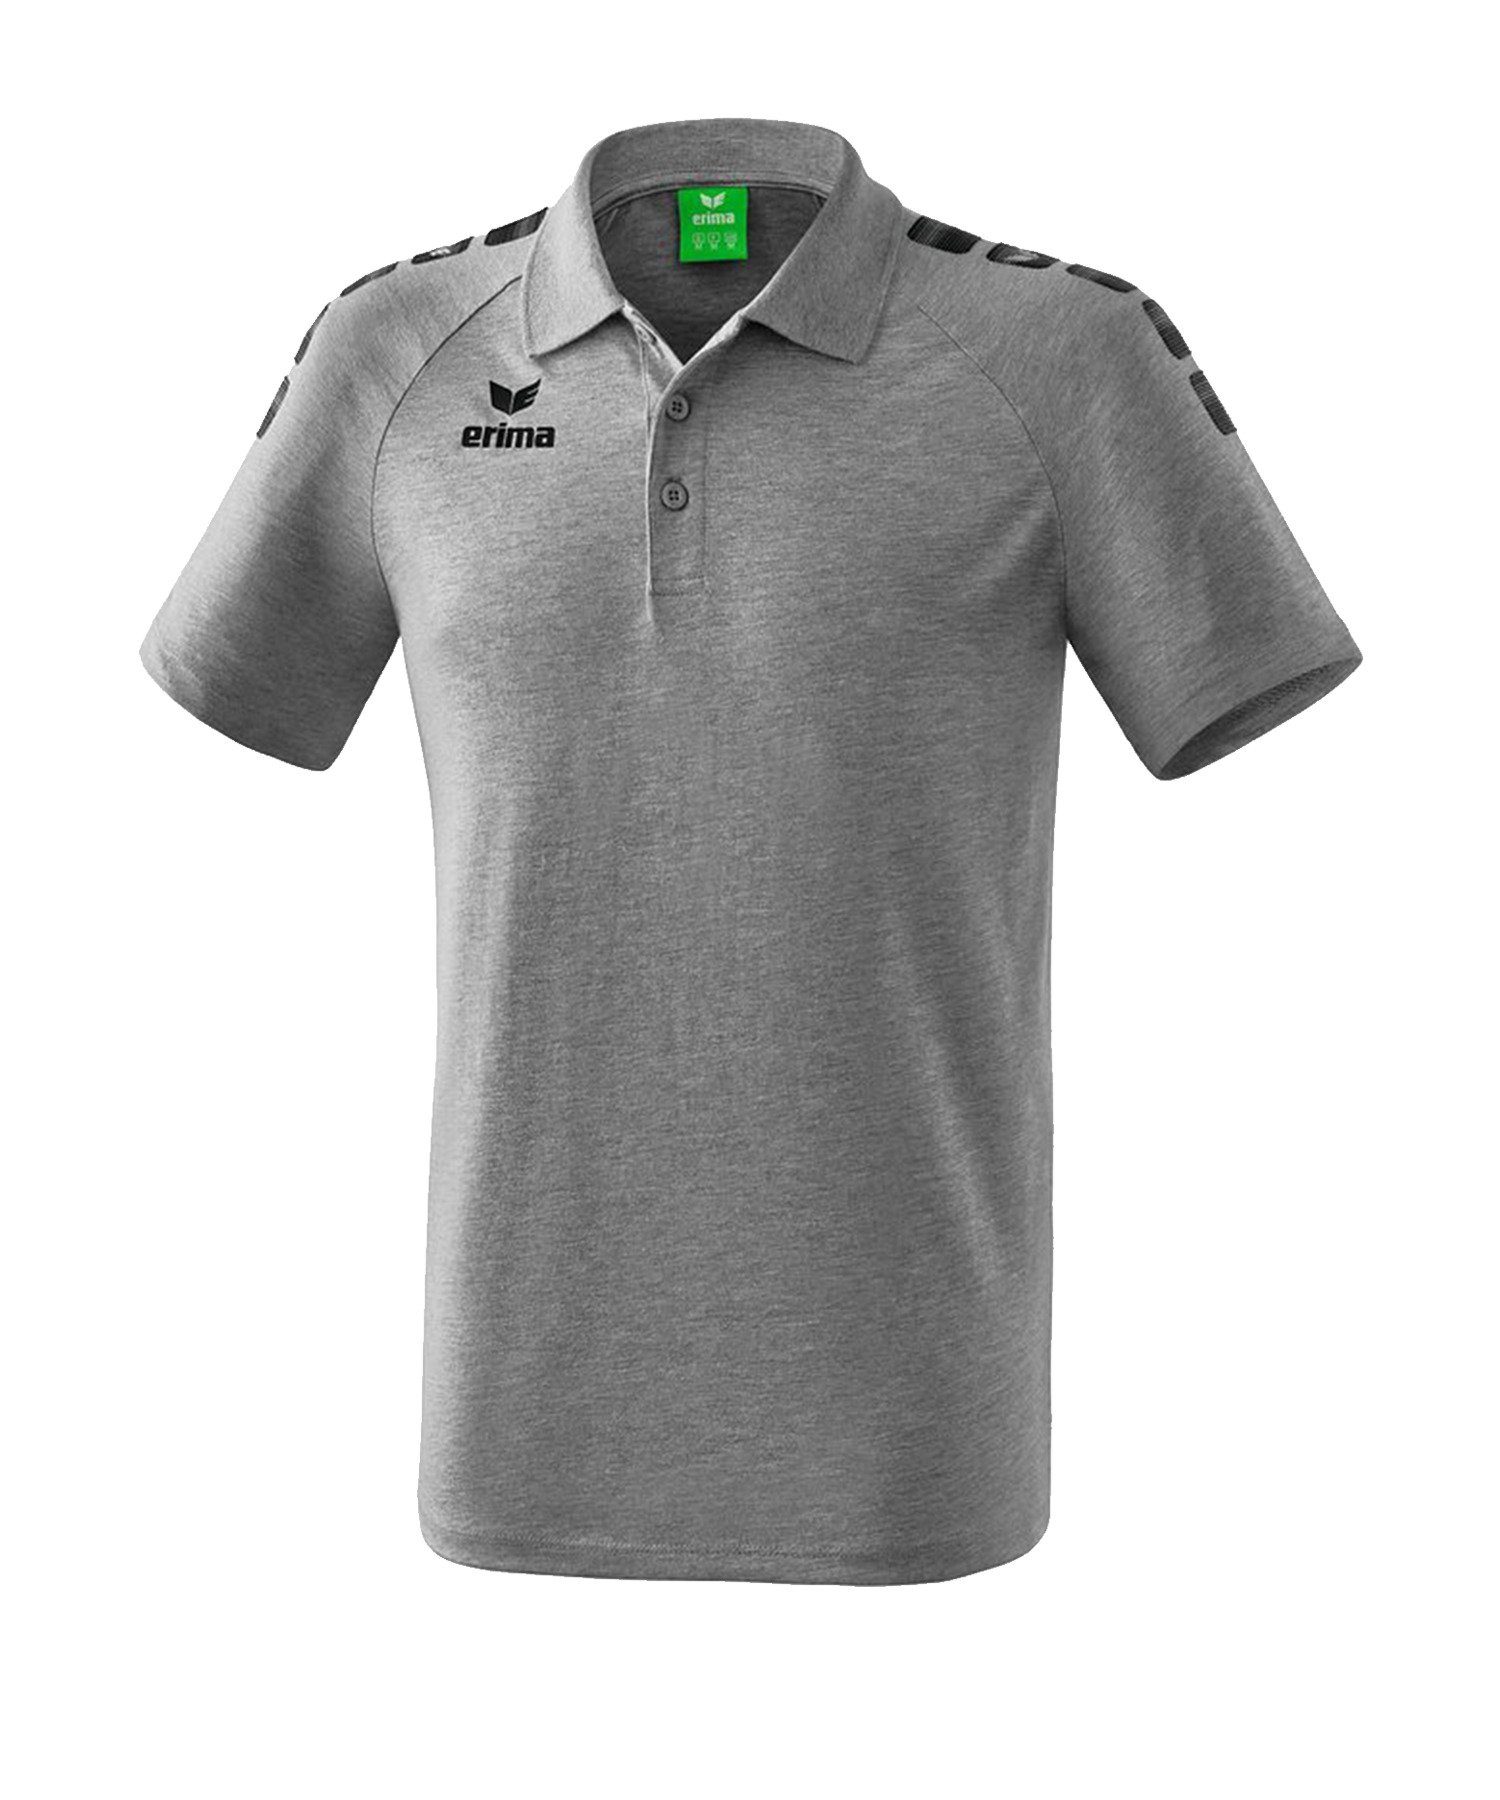 Erima Essential default Poloshirt GrauSchwarz T-Shirt 5-C